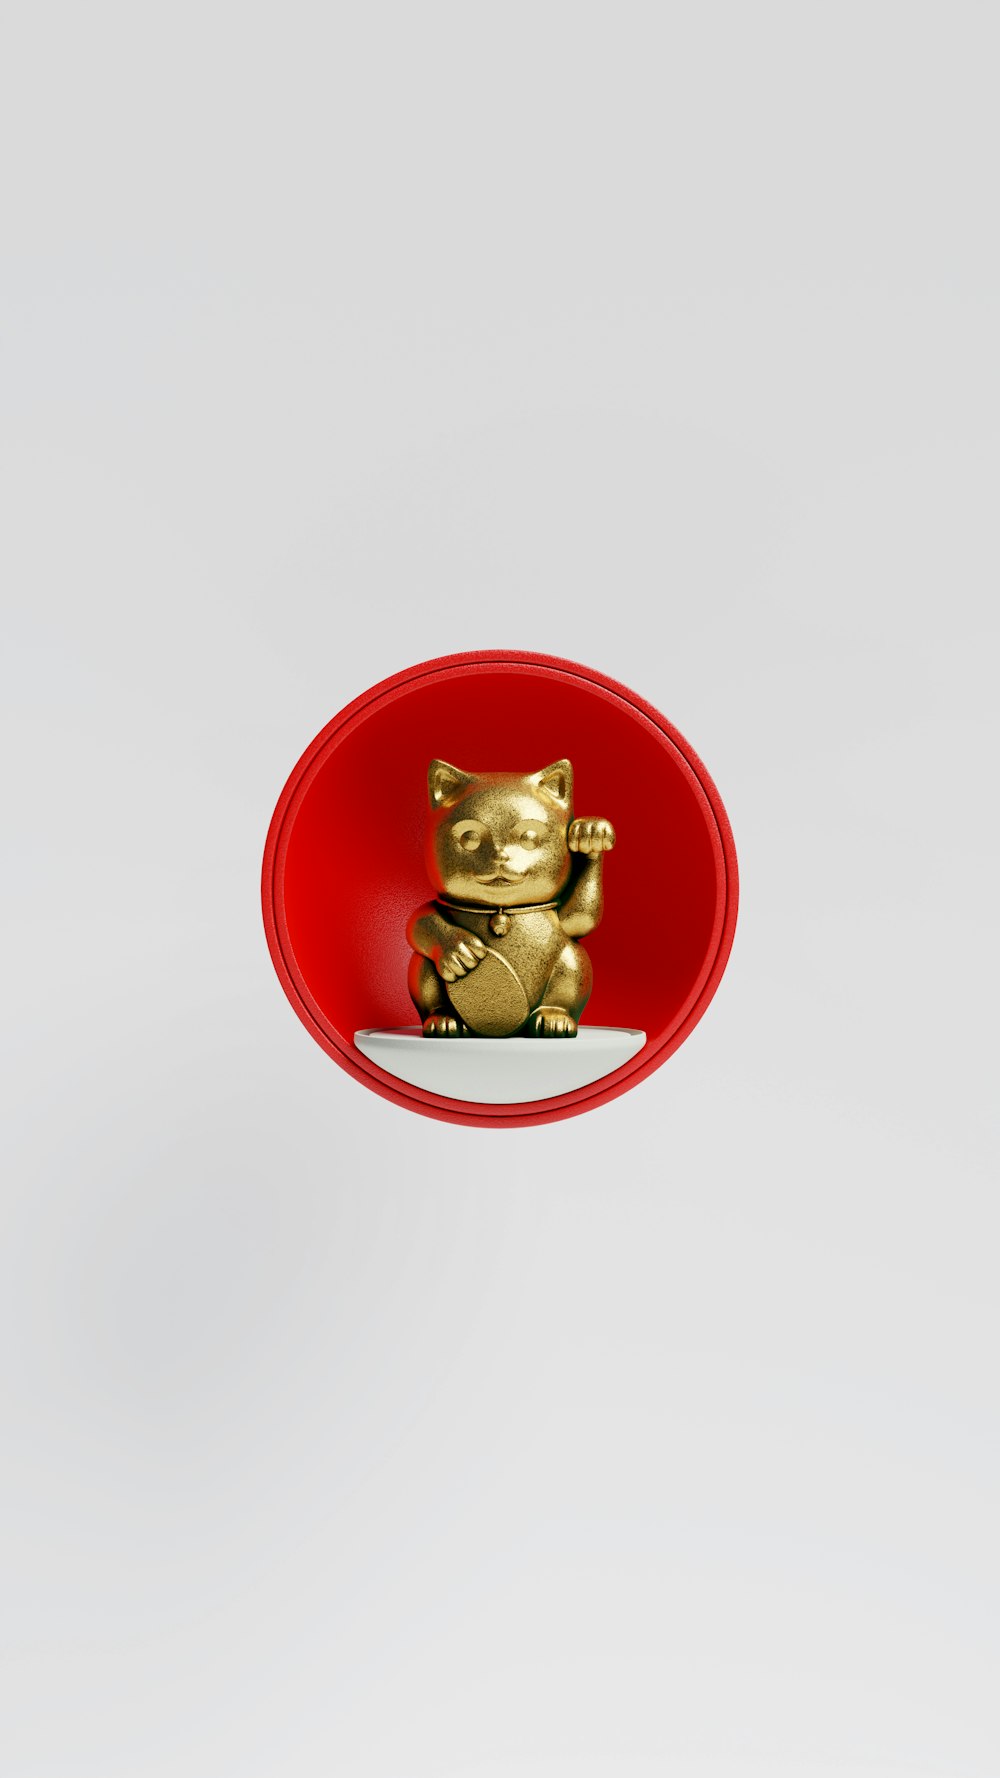 a gold cat figurine sitting in a red bowl